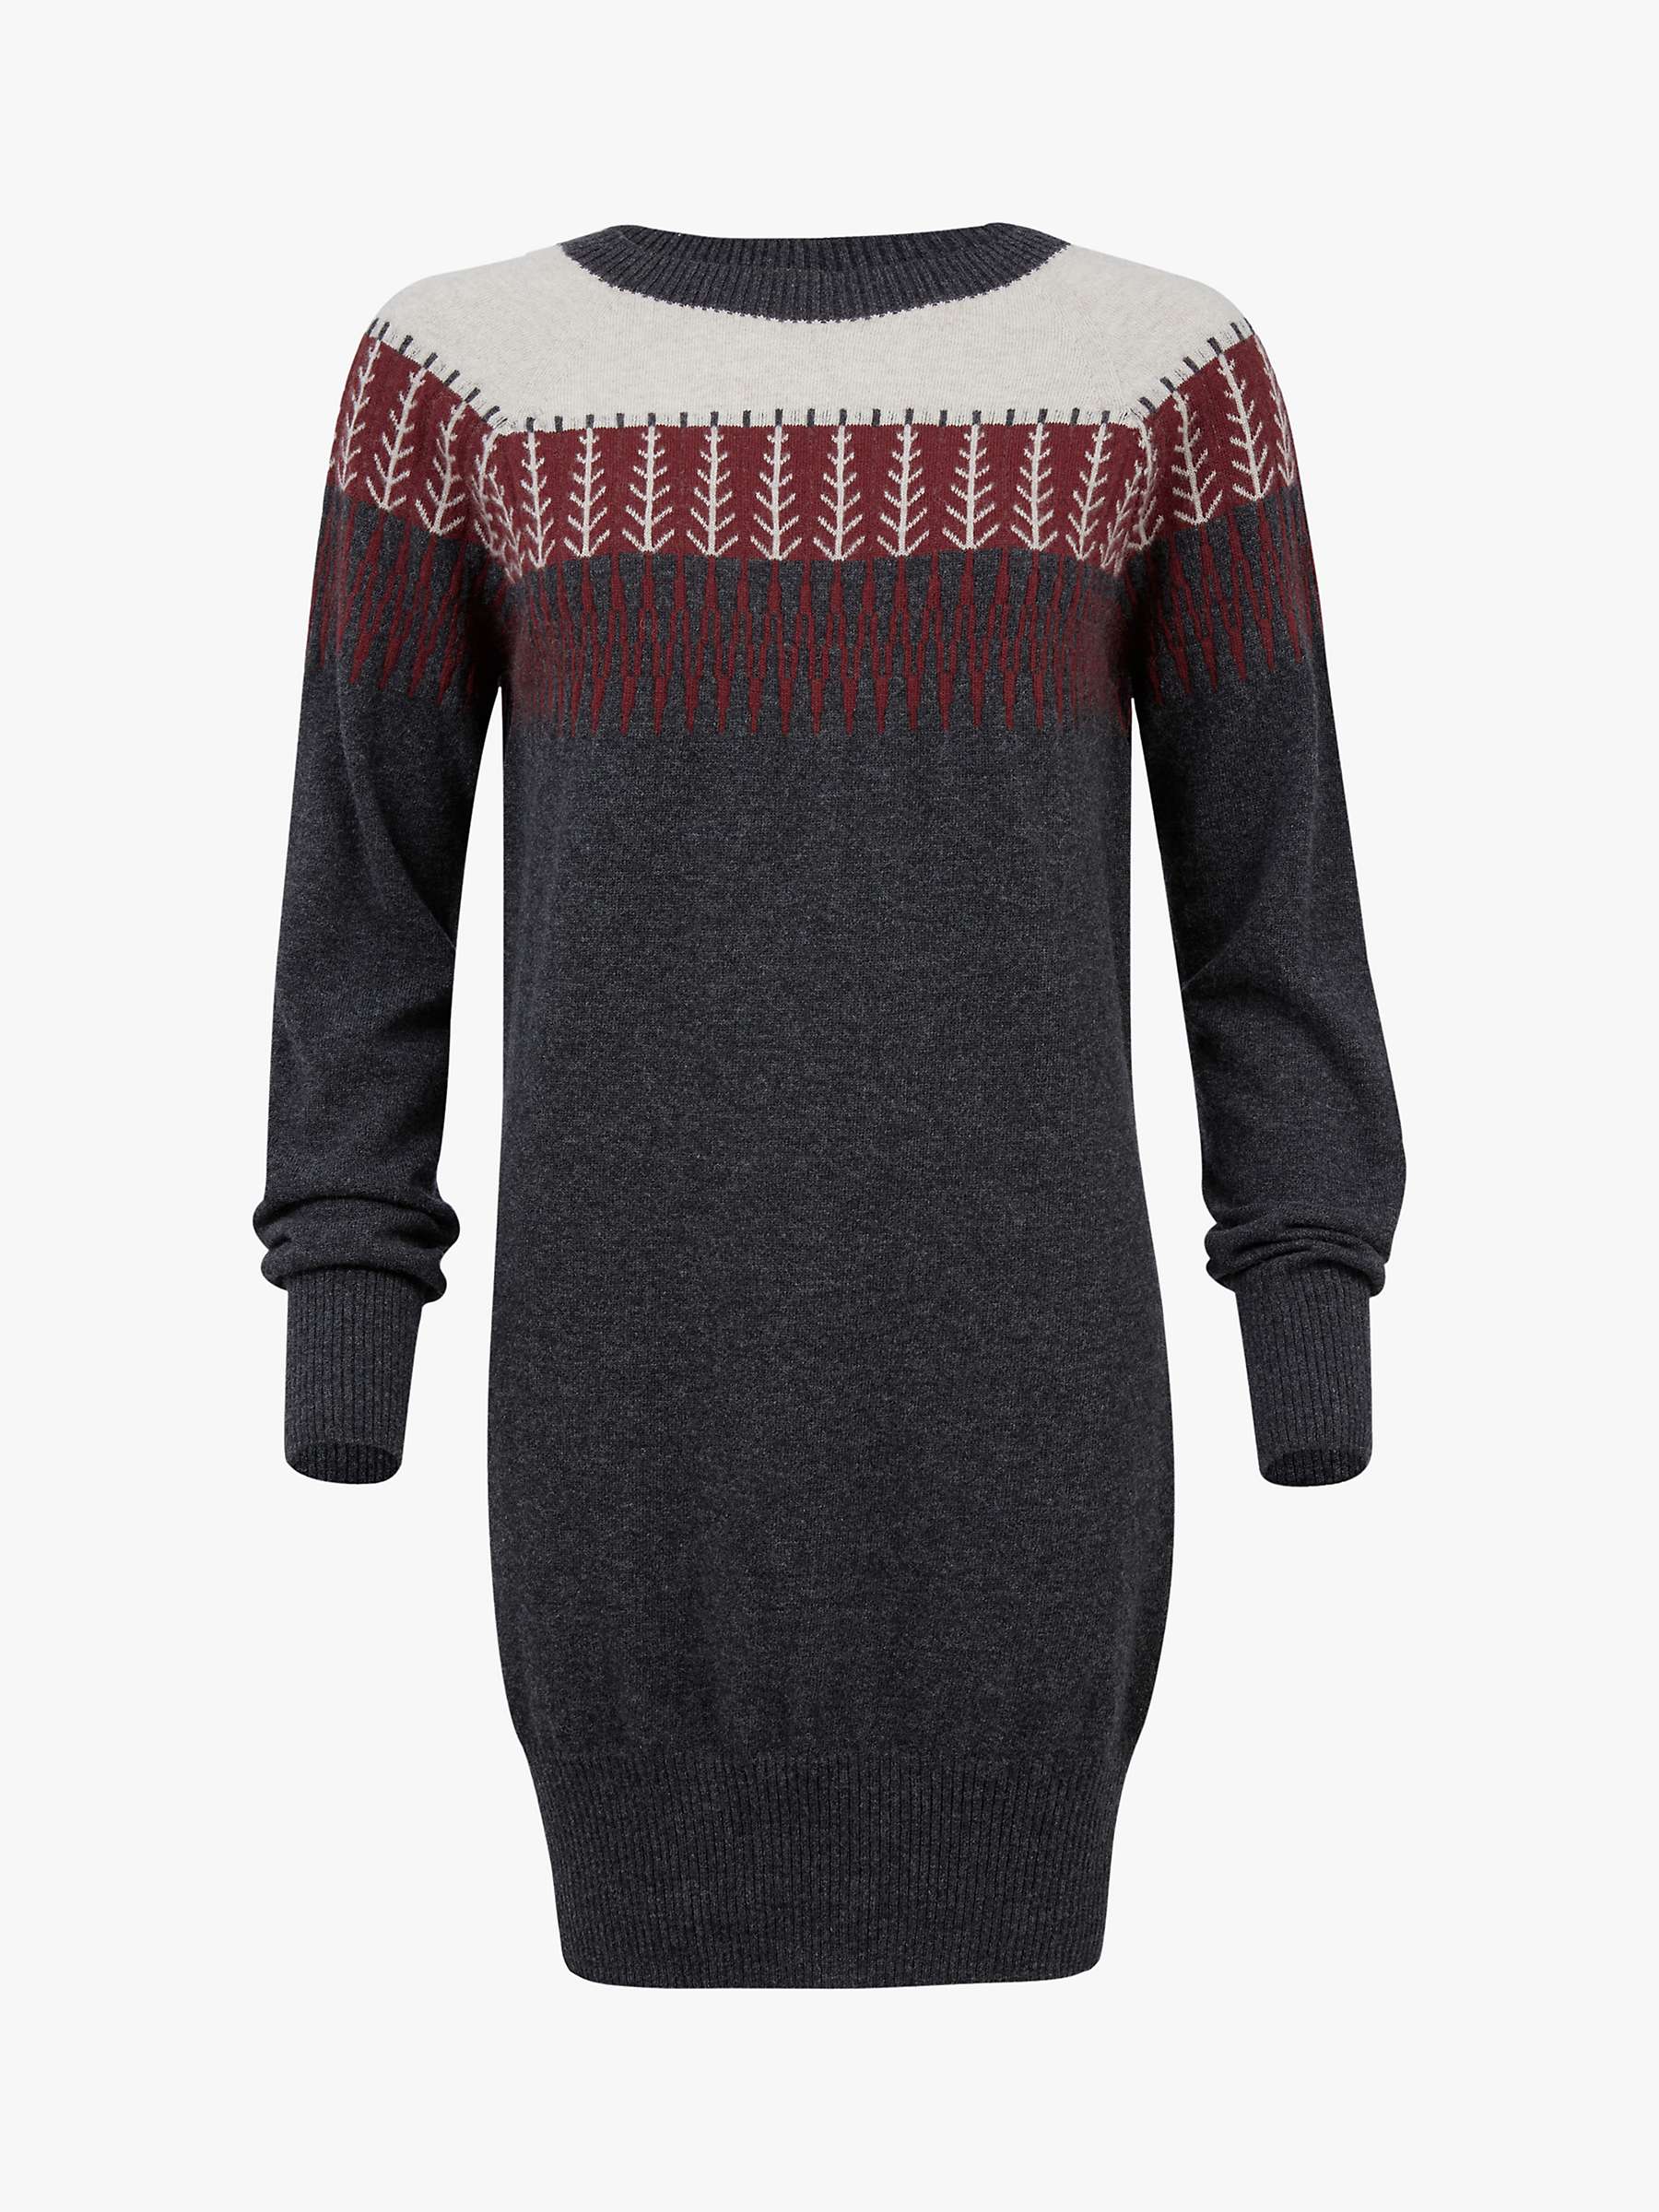 Buy Celtic & Co. Supersoft Slouch Wool Jumper Dress, Charcoal/Claret Online at johnlewis.com